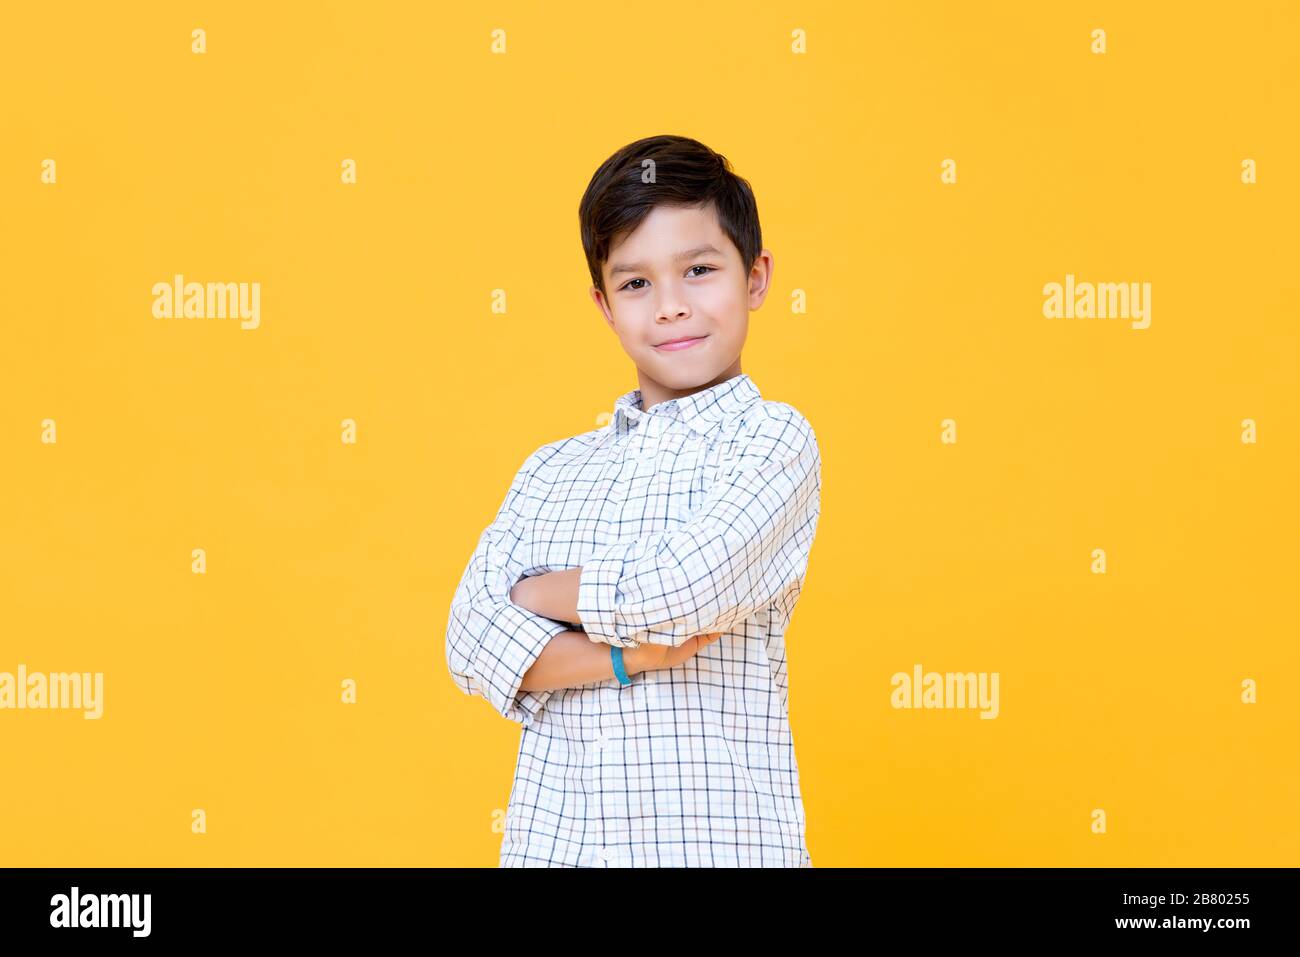 Felice ragazzo sorridente con braccio traversato gesto isolato su sfondo giallo Foto Stock